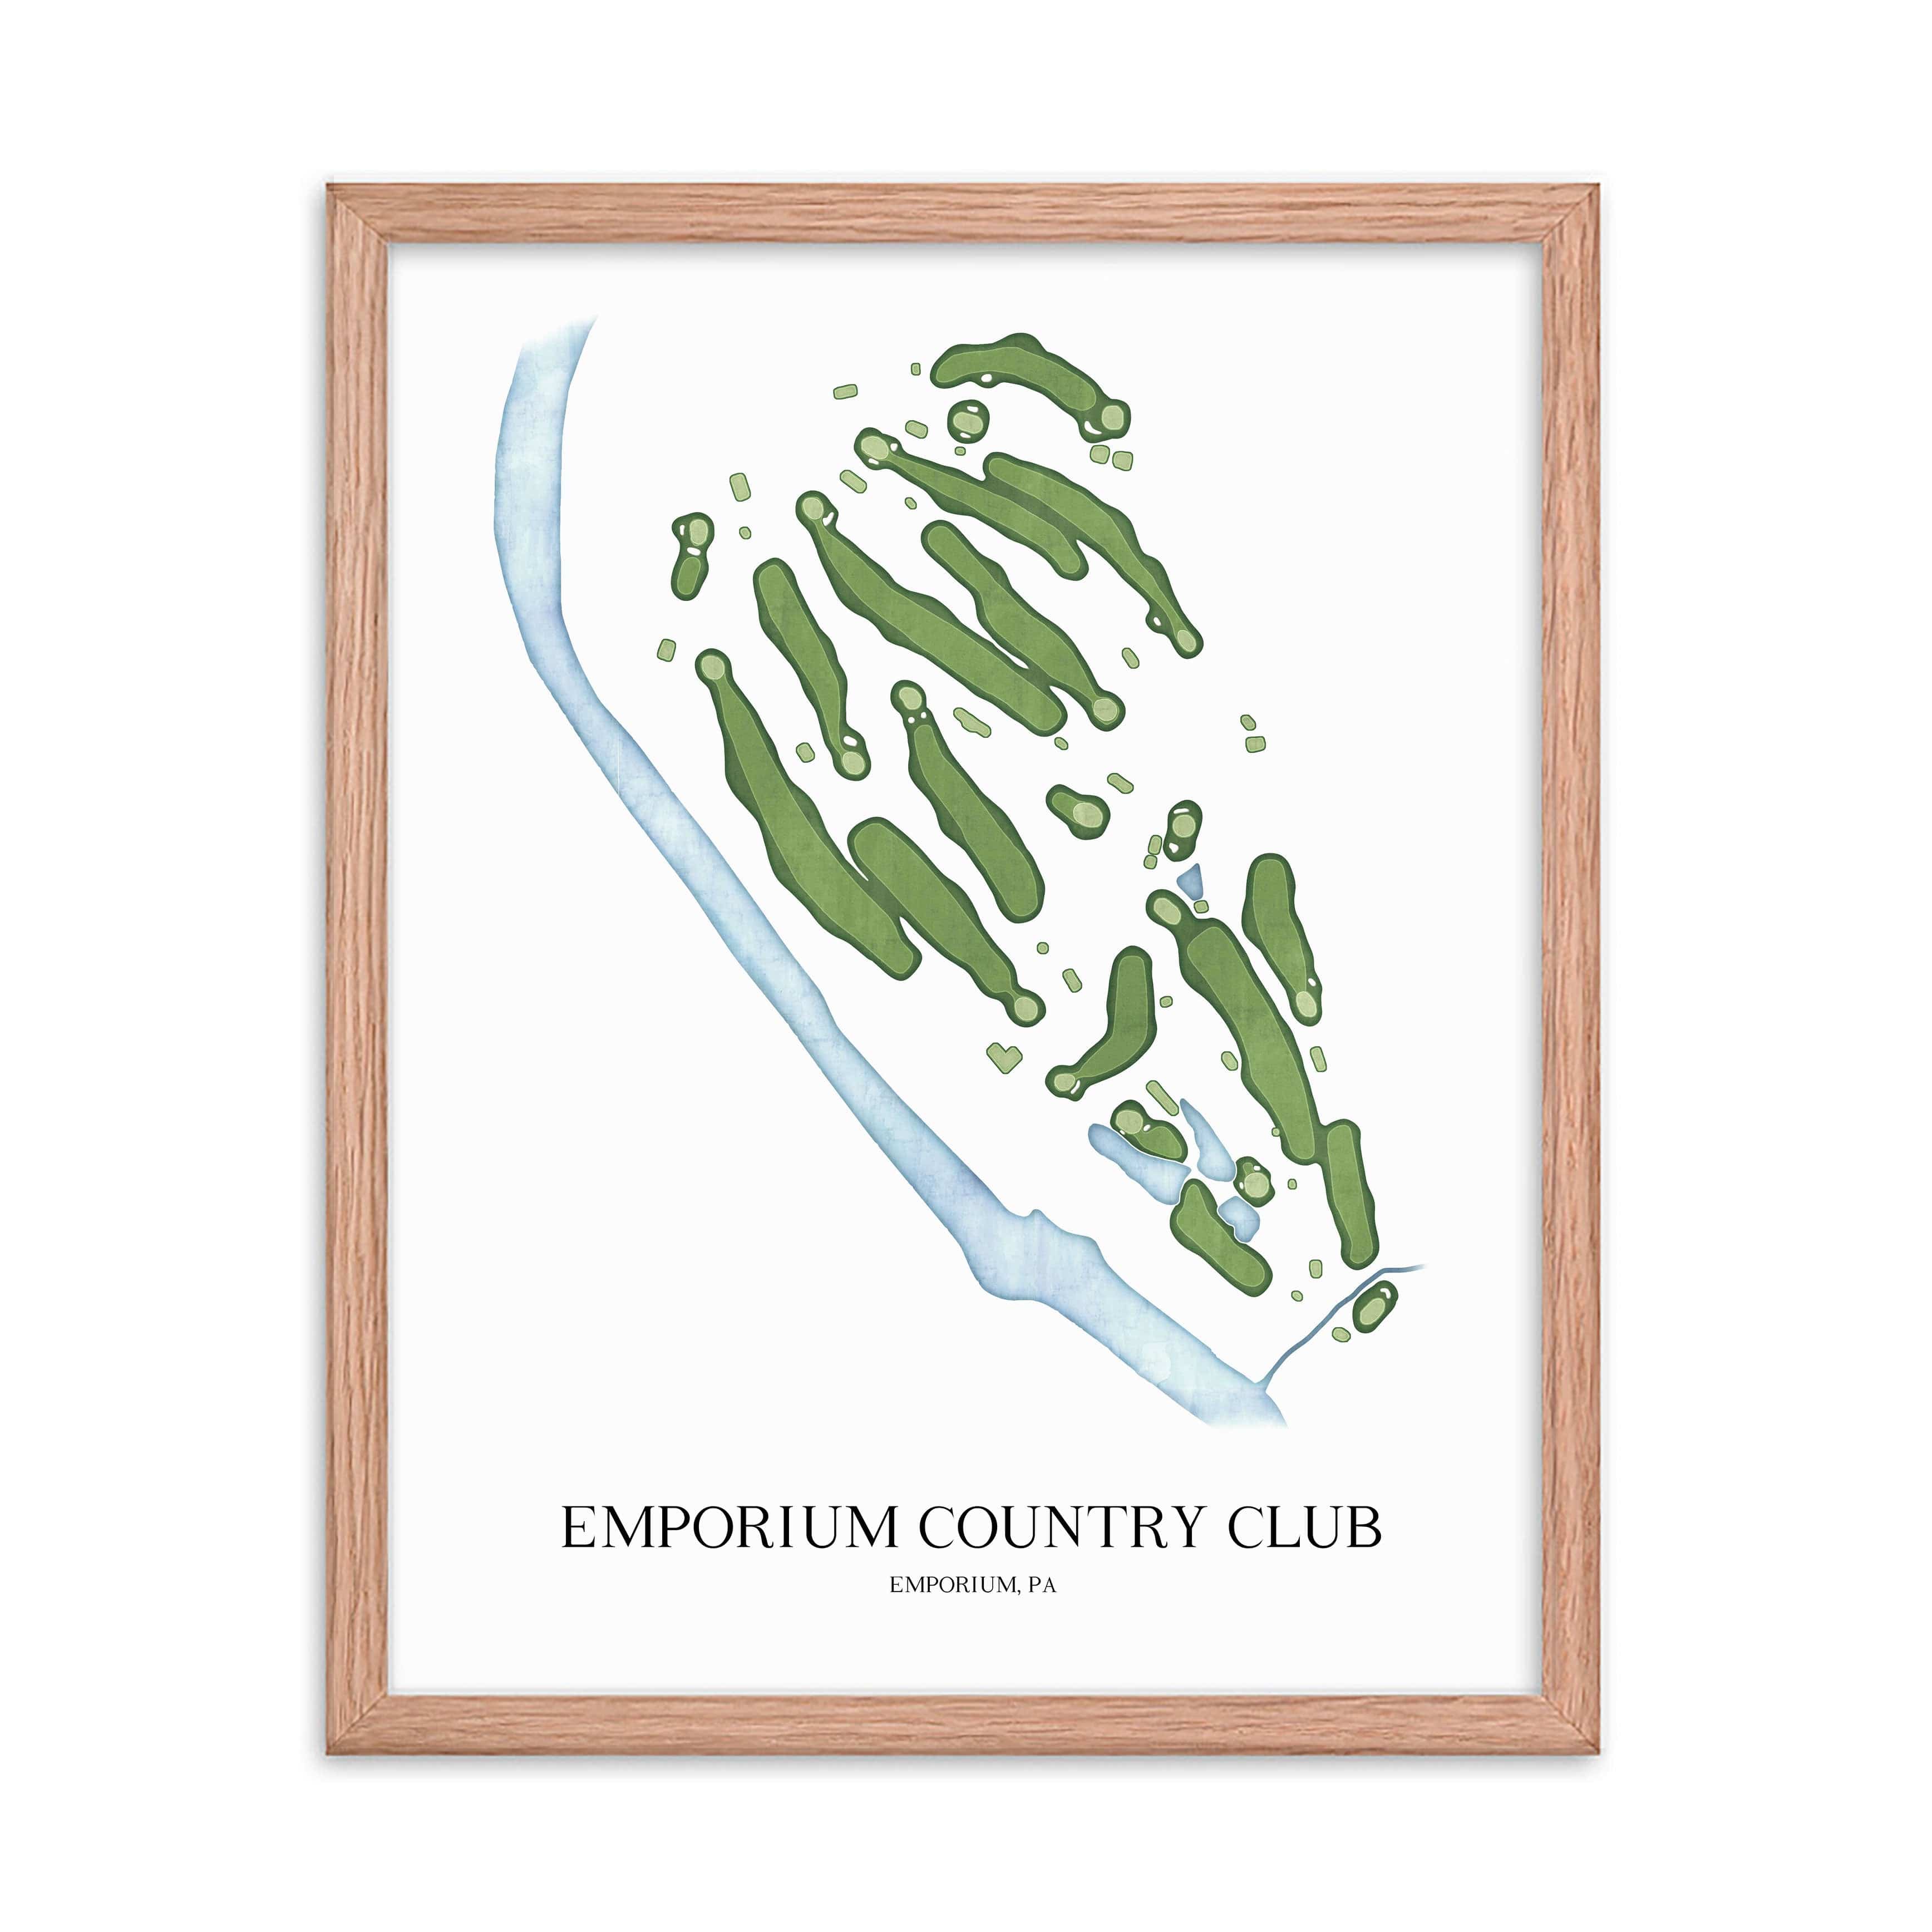 The 19th Hole Golf Shop - Golf Course Prints -  Emporium Country Club Golf Course Map